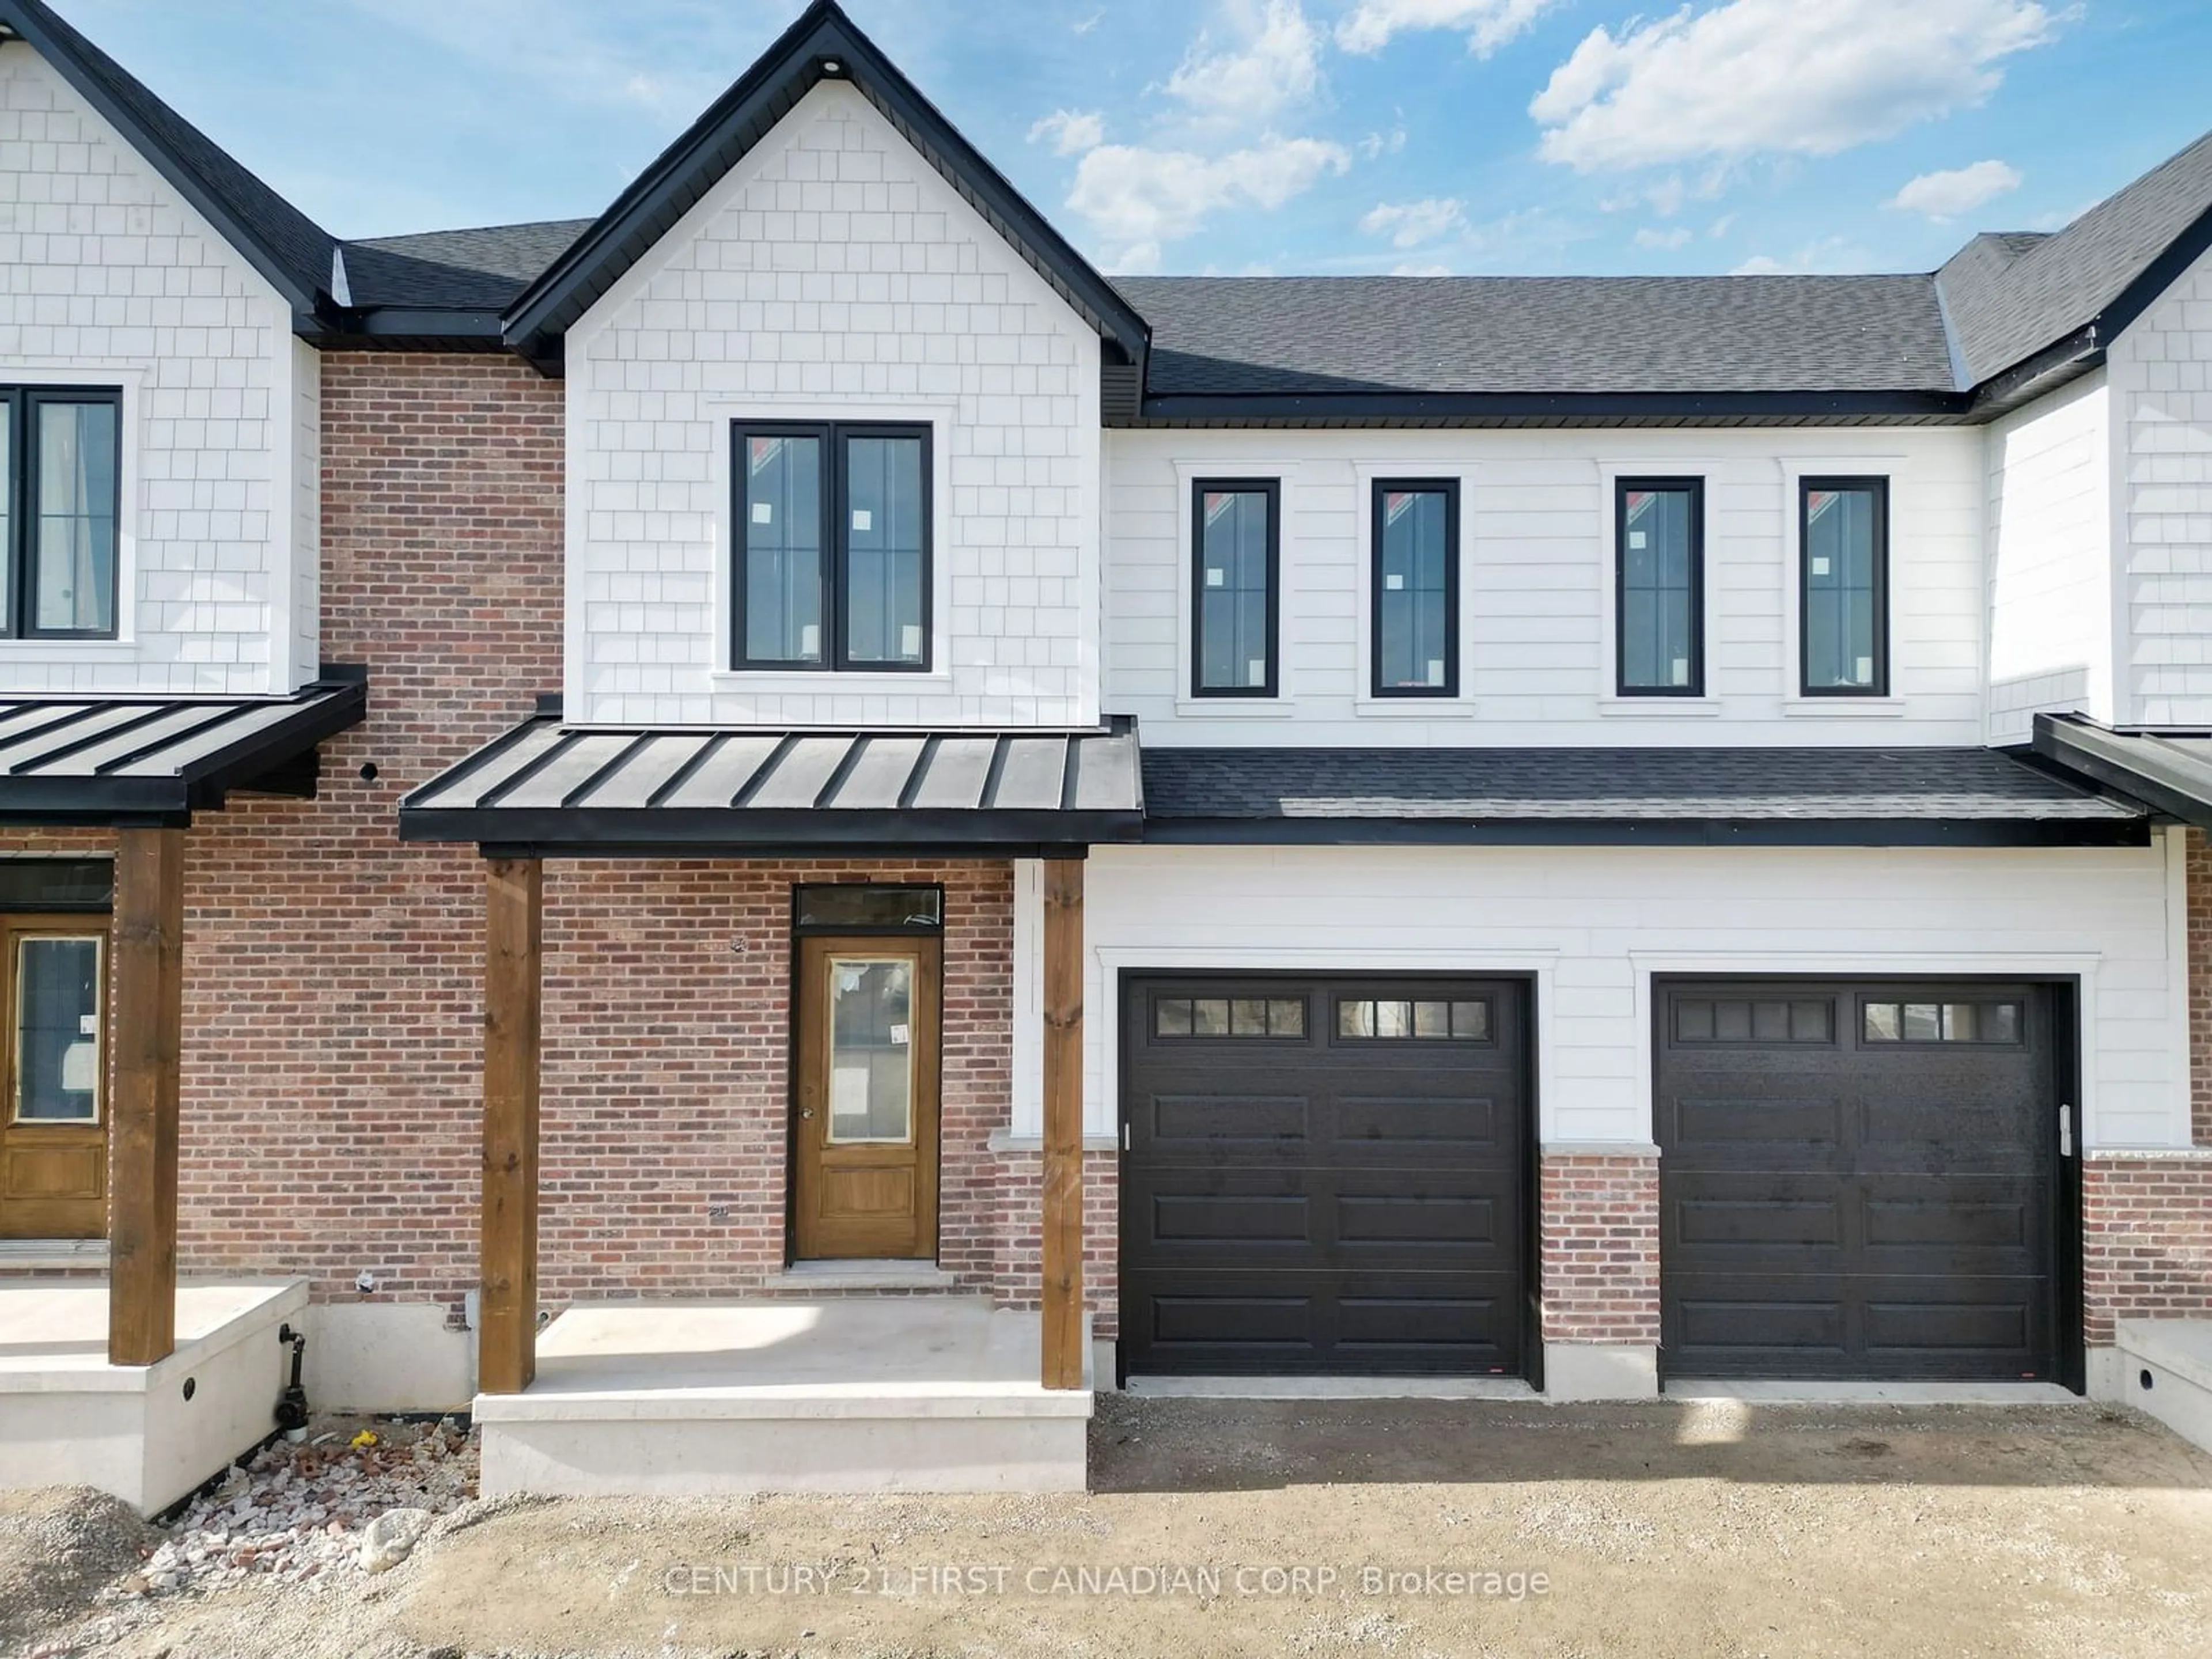 Home with brick exterior material for 147-52 SCOTTS Dr, Lucan Biddulph Ontario N0M 2J0